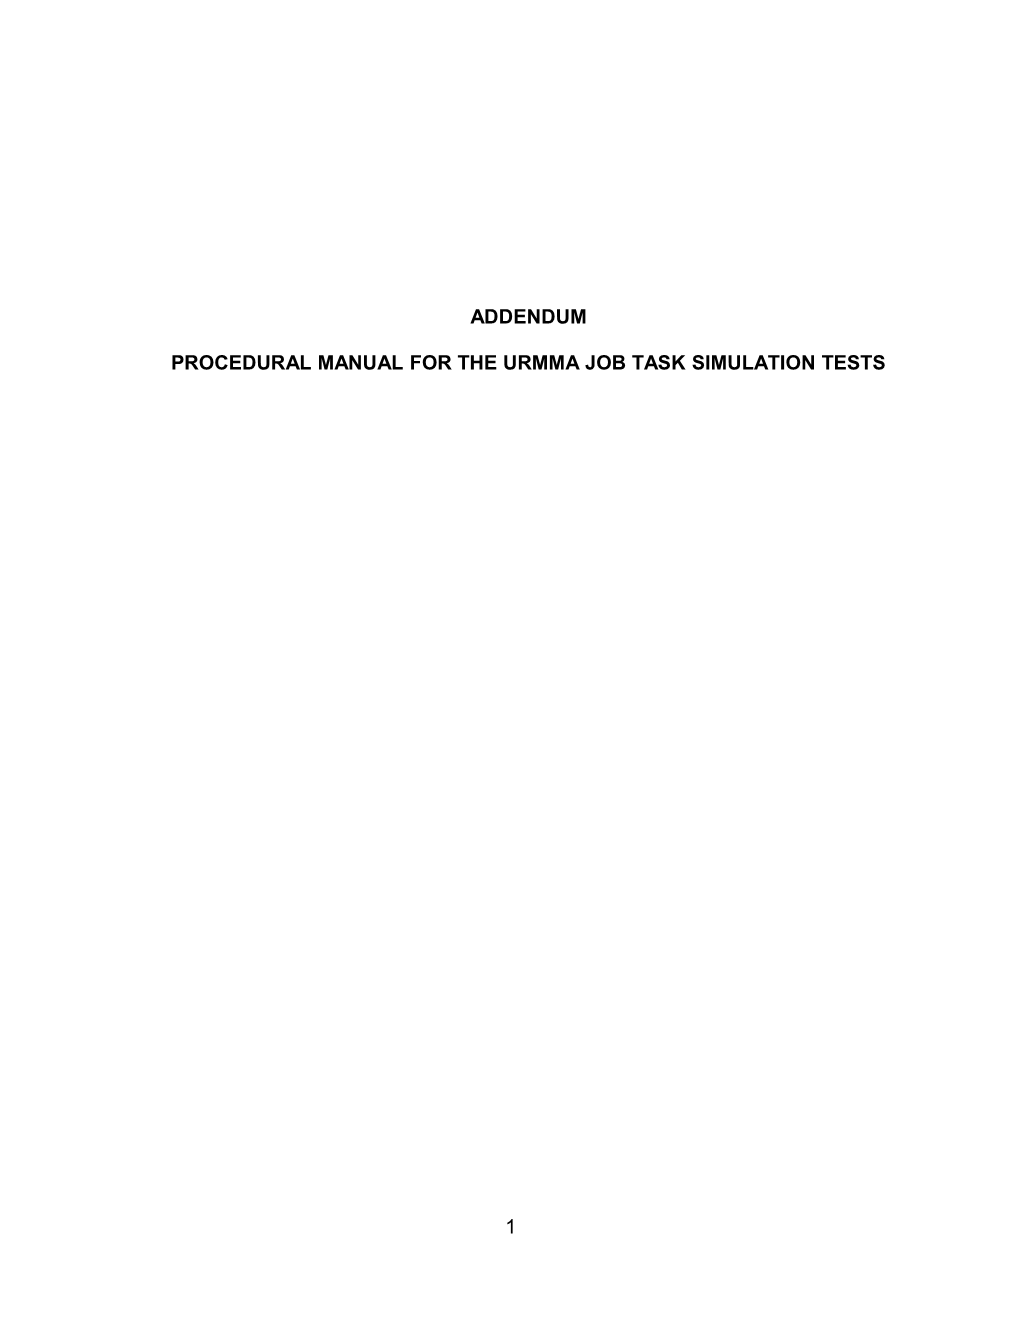 Procedural Manual for the Urmma Job Task Simulation Tests